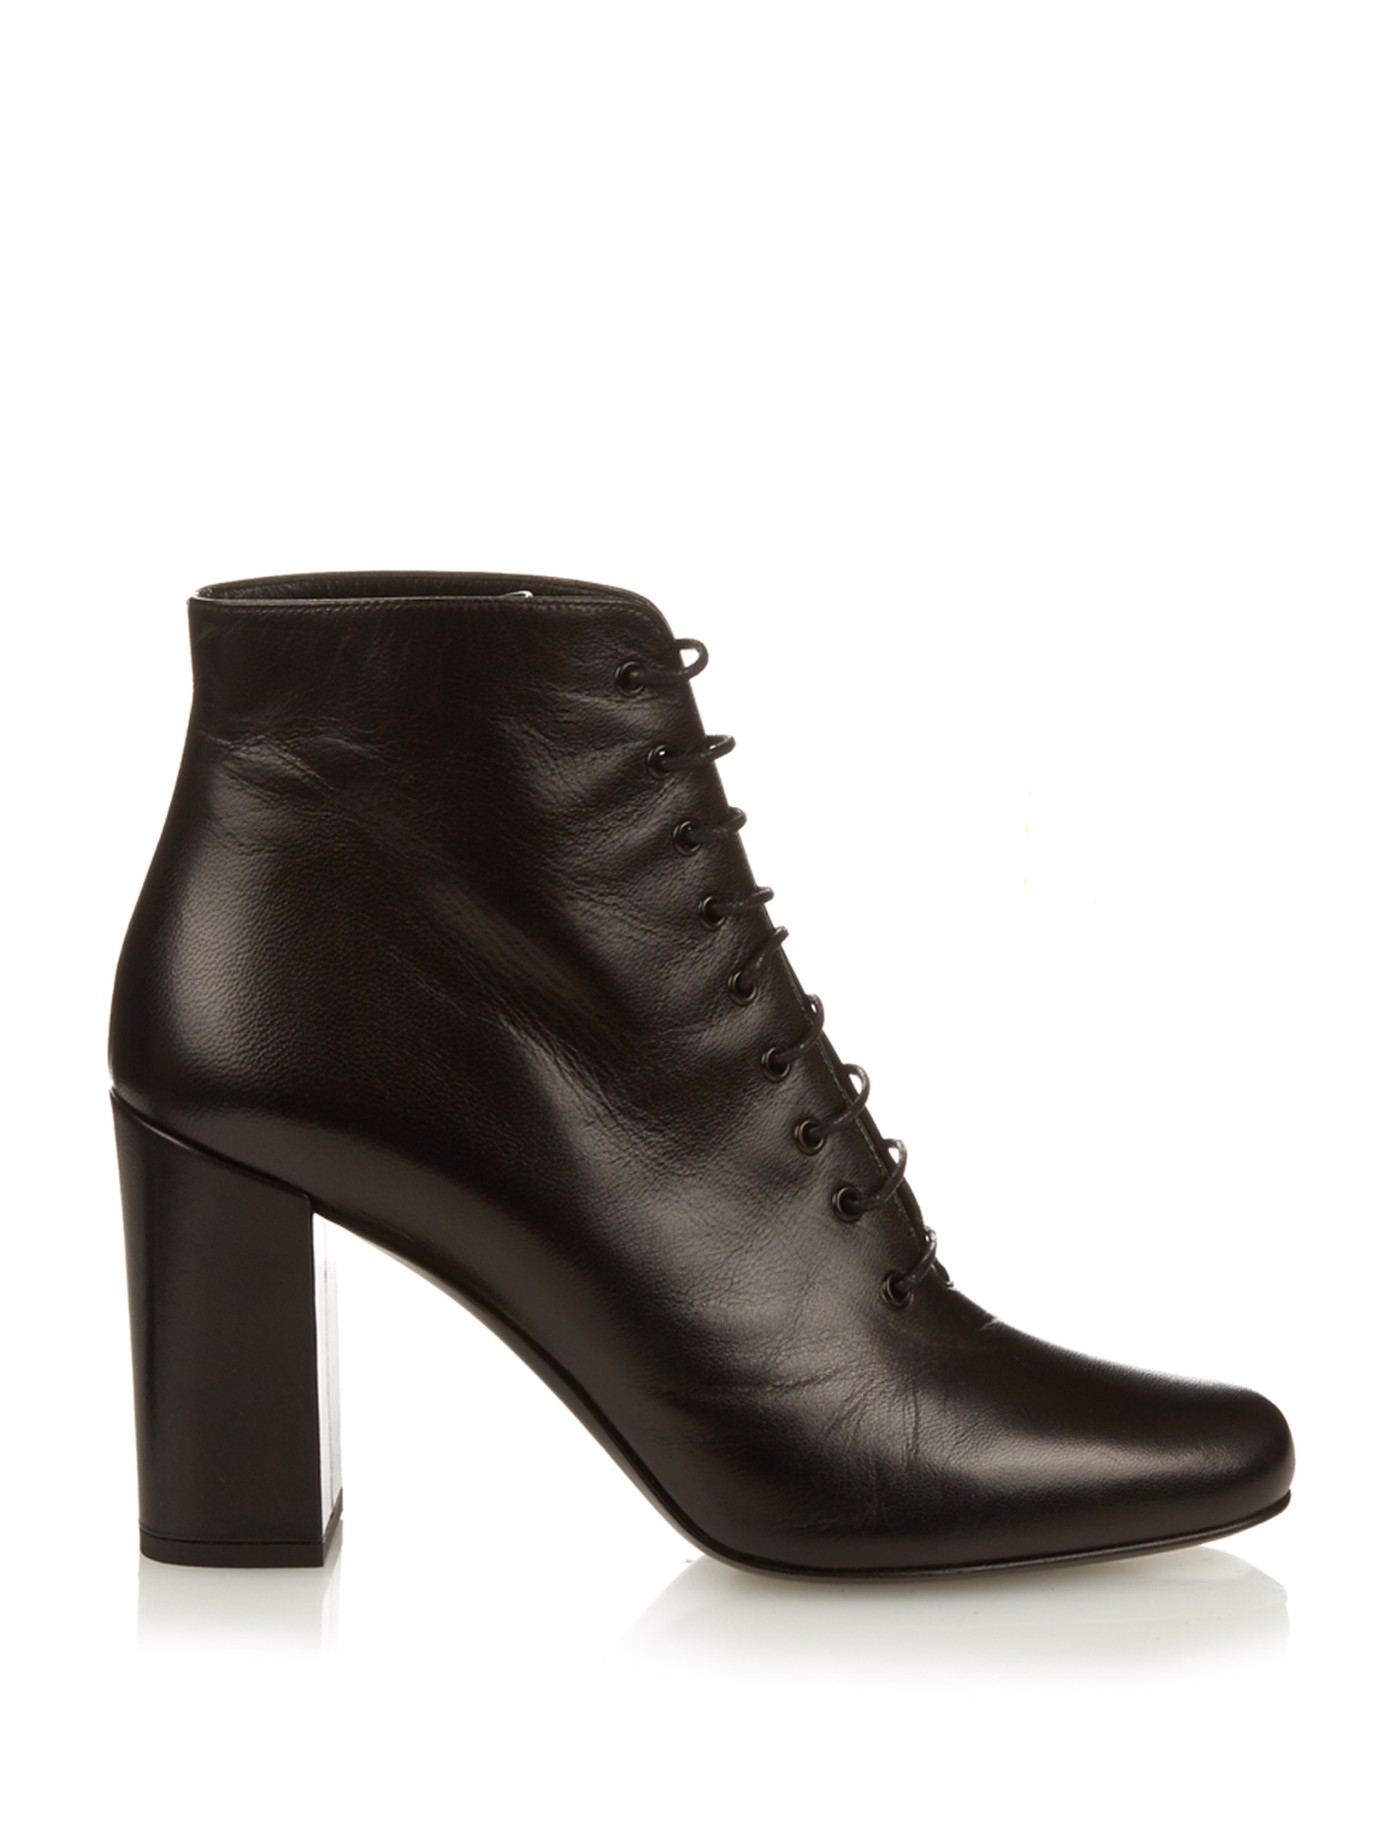 Shoes Boots Ankle Boots Yves Saint Laurent Ankle Boots \u201eAnkle Boots Leather Black\u201c black 